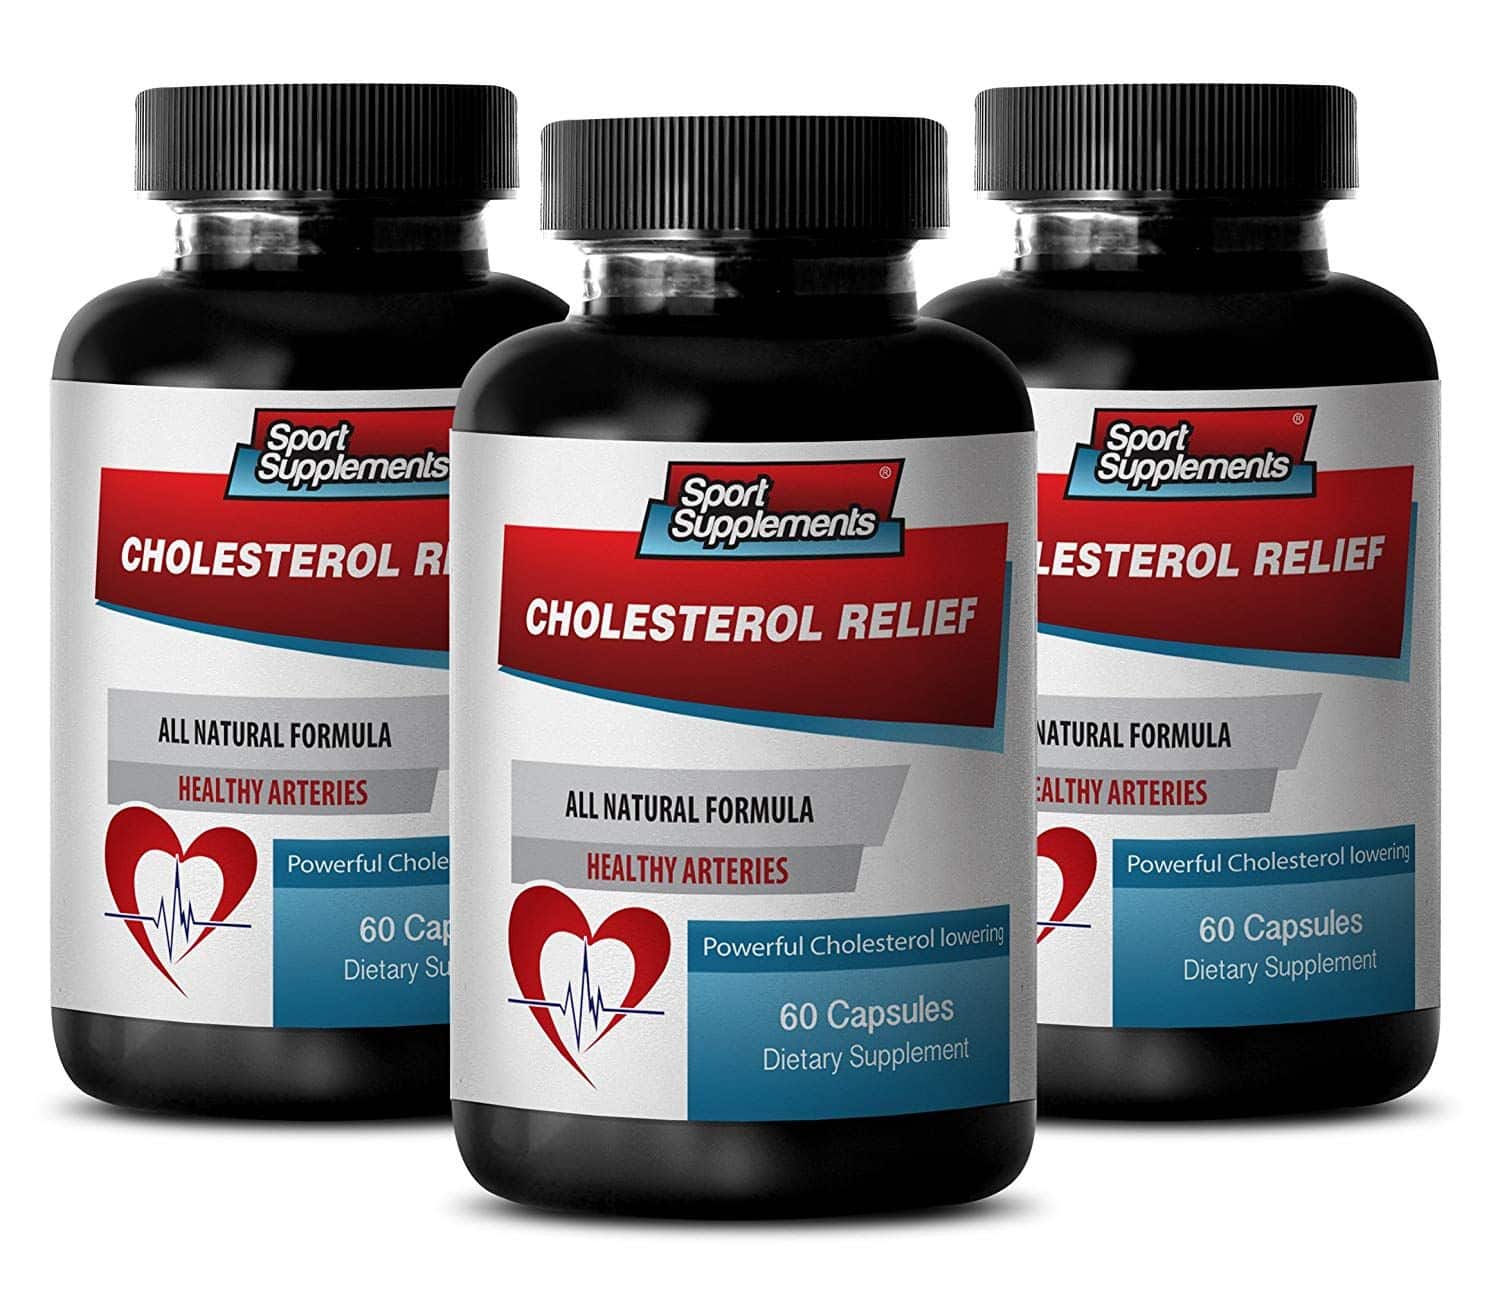 Anti cholesterol supplements